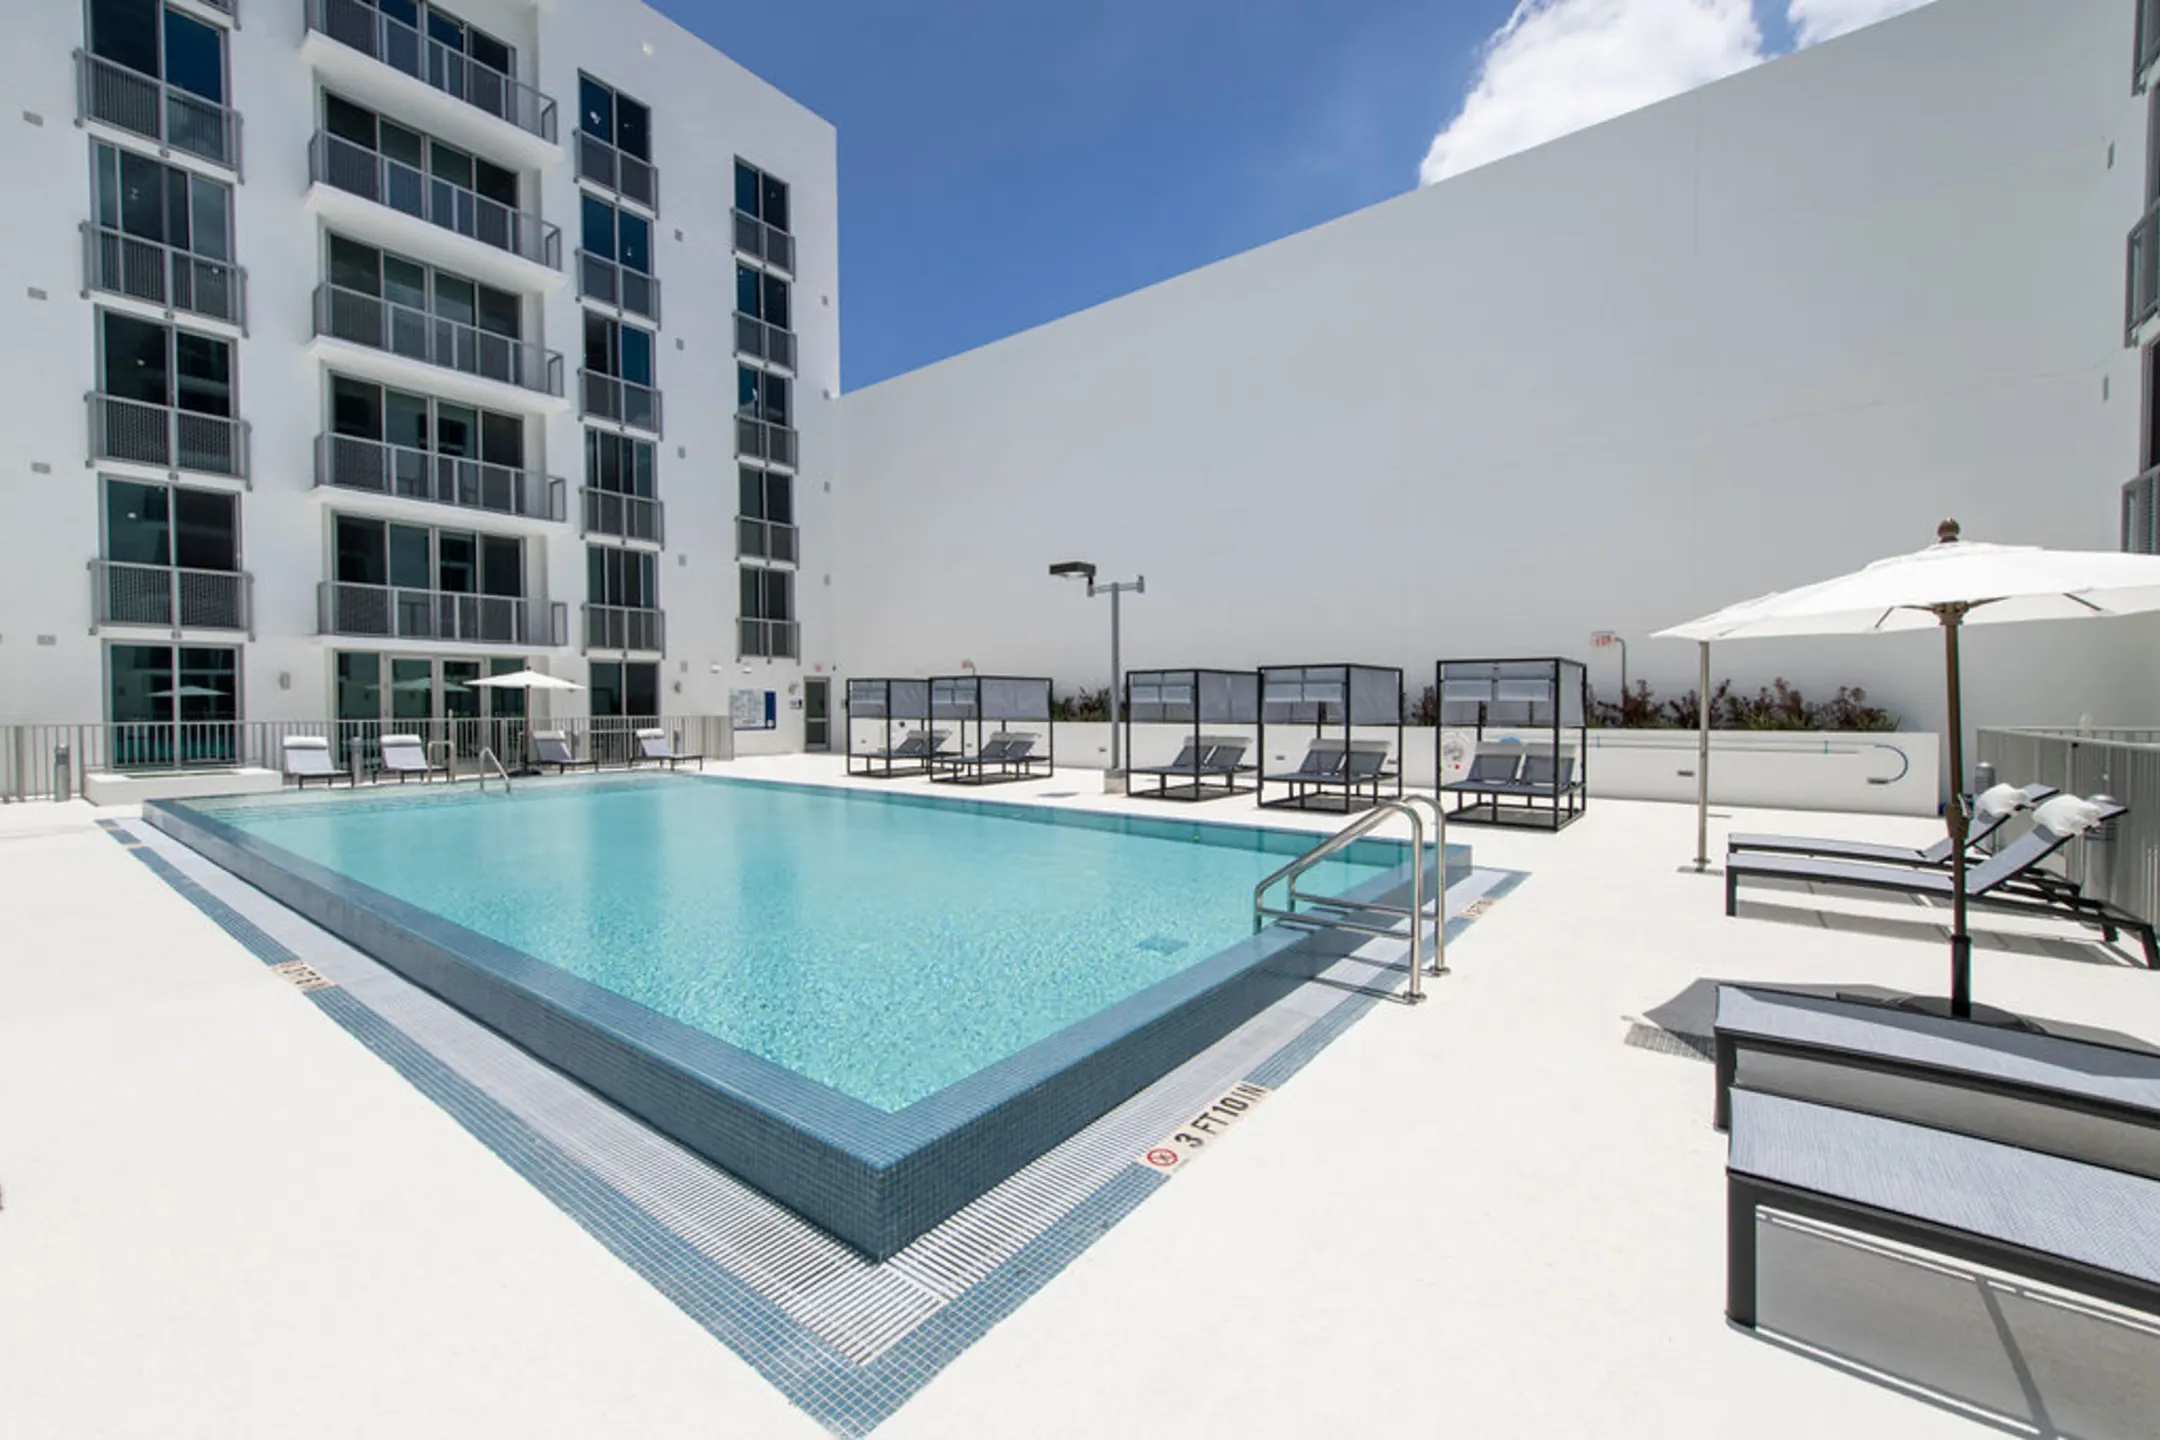 Pool - Platform 3750 - Miami, FL